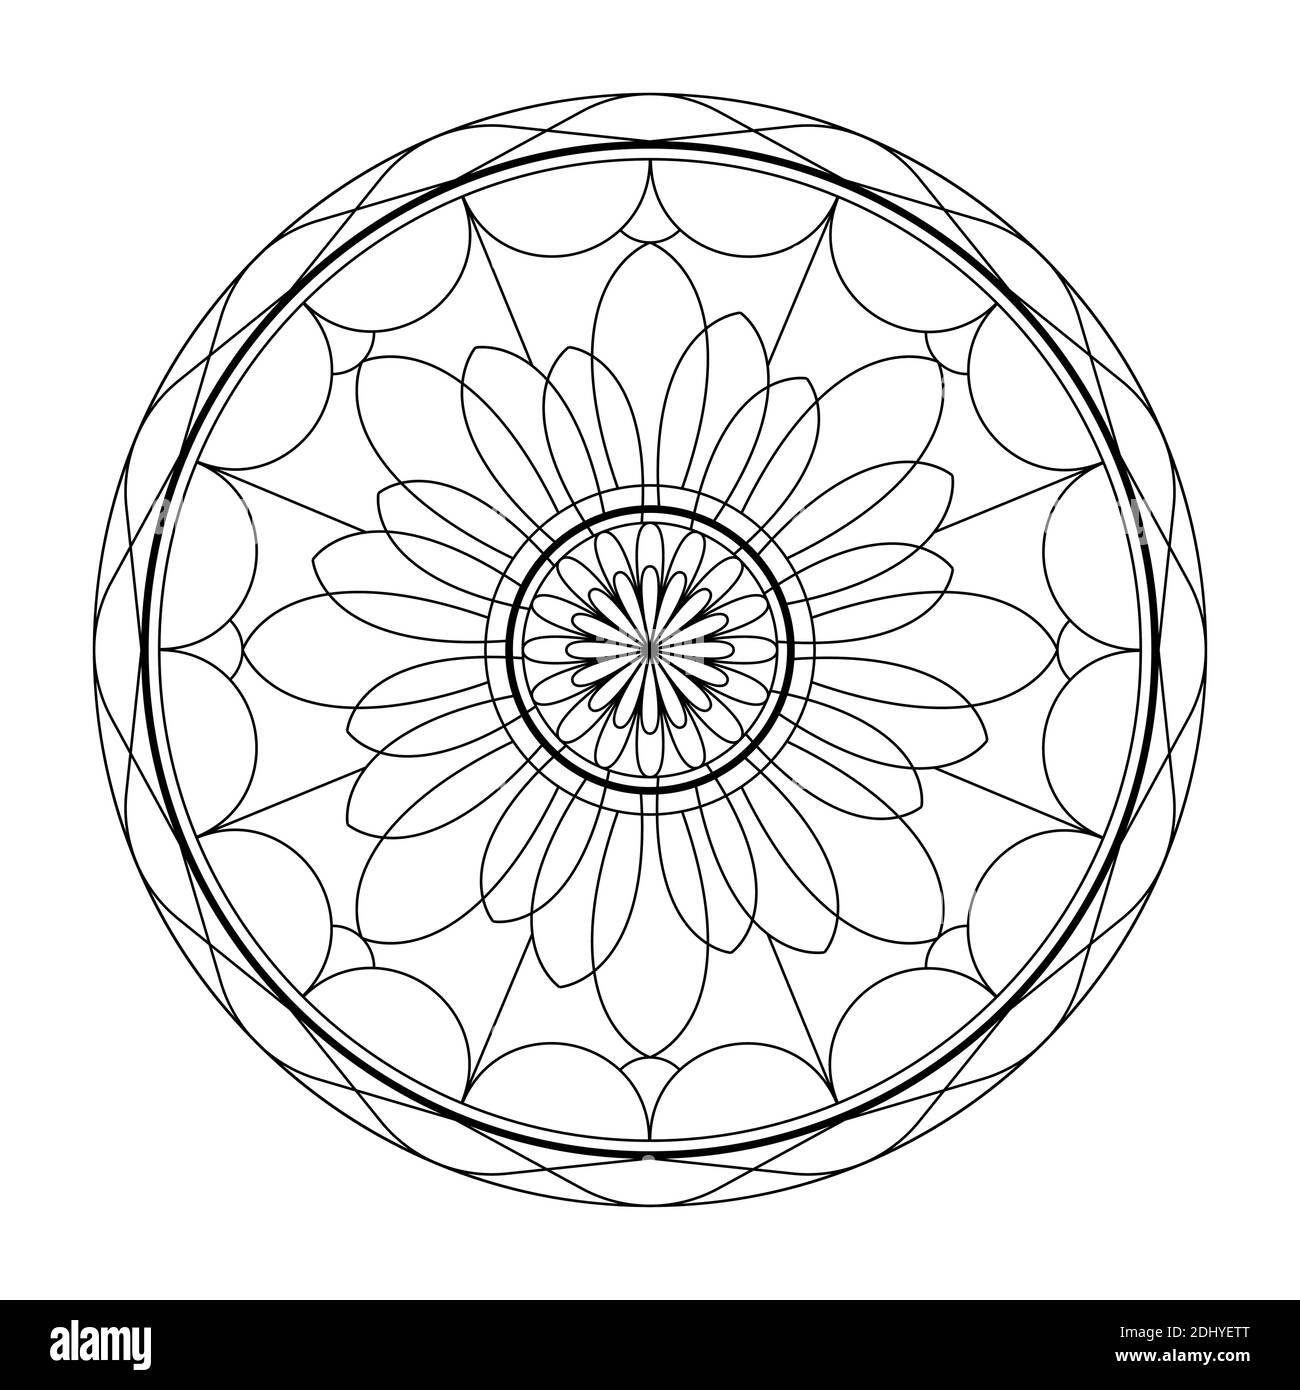 Mandala-Linienvektor. Ein symmetrisches rundes monochromes Ornament. Farbgebung Stock Vektor